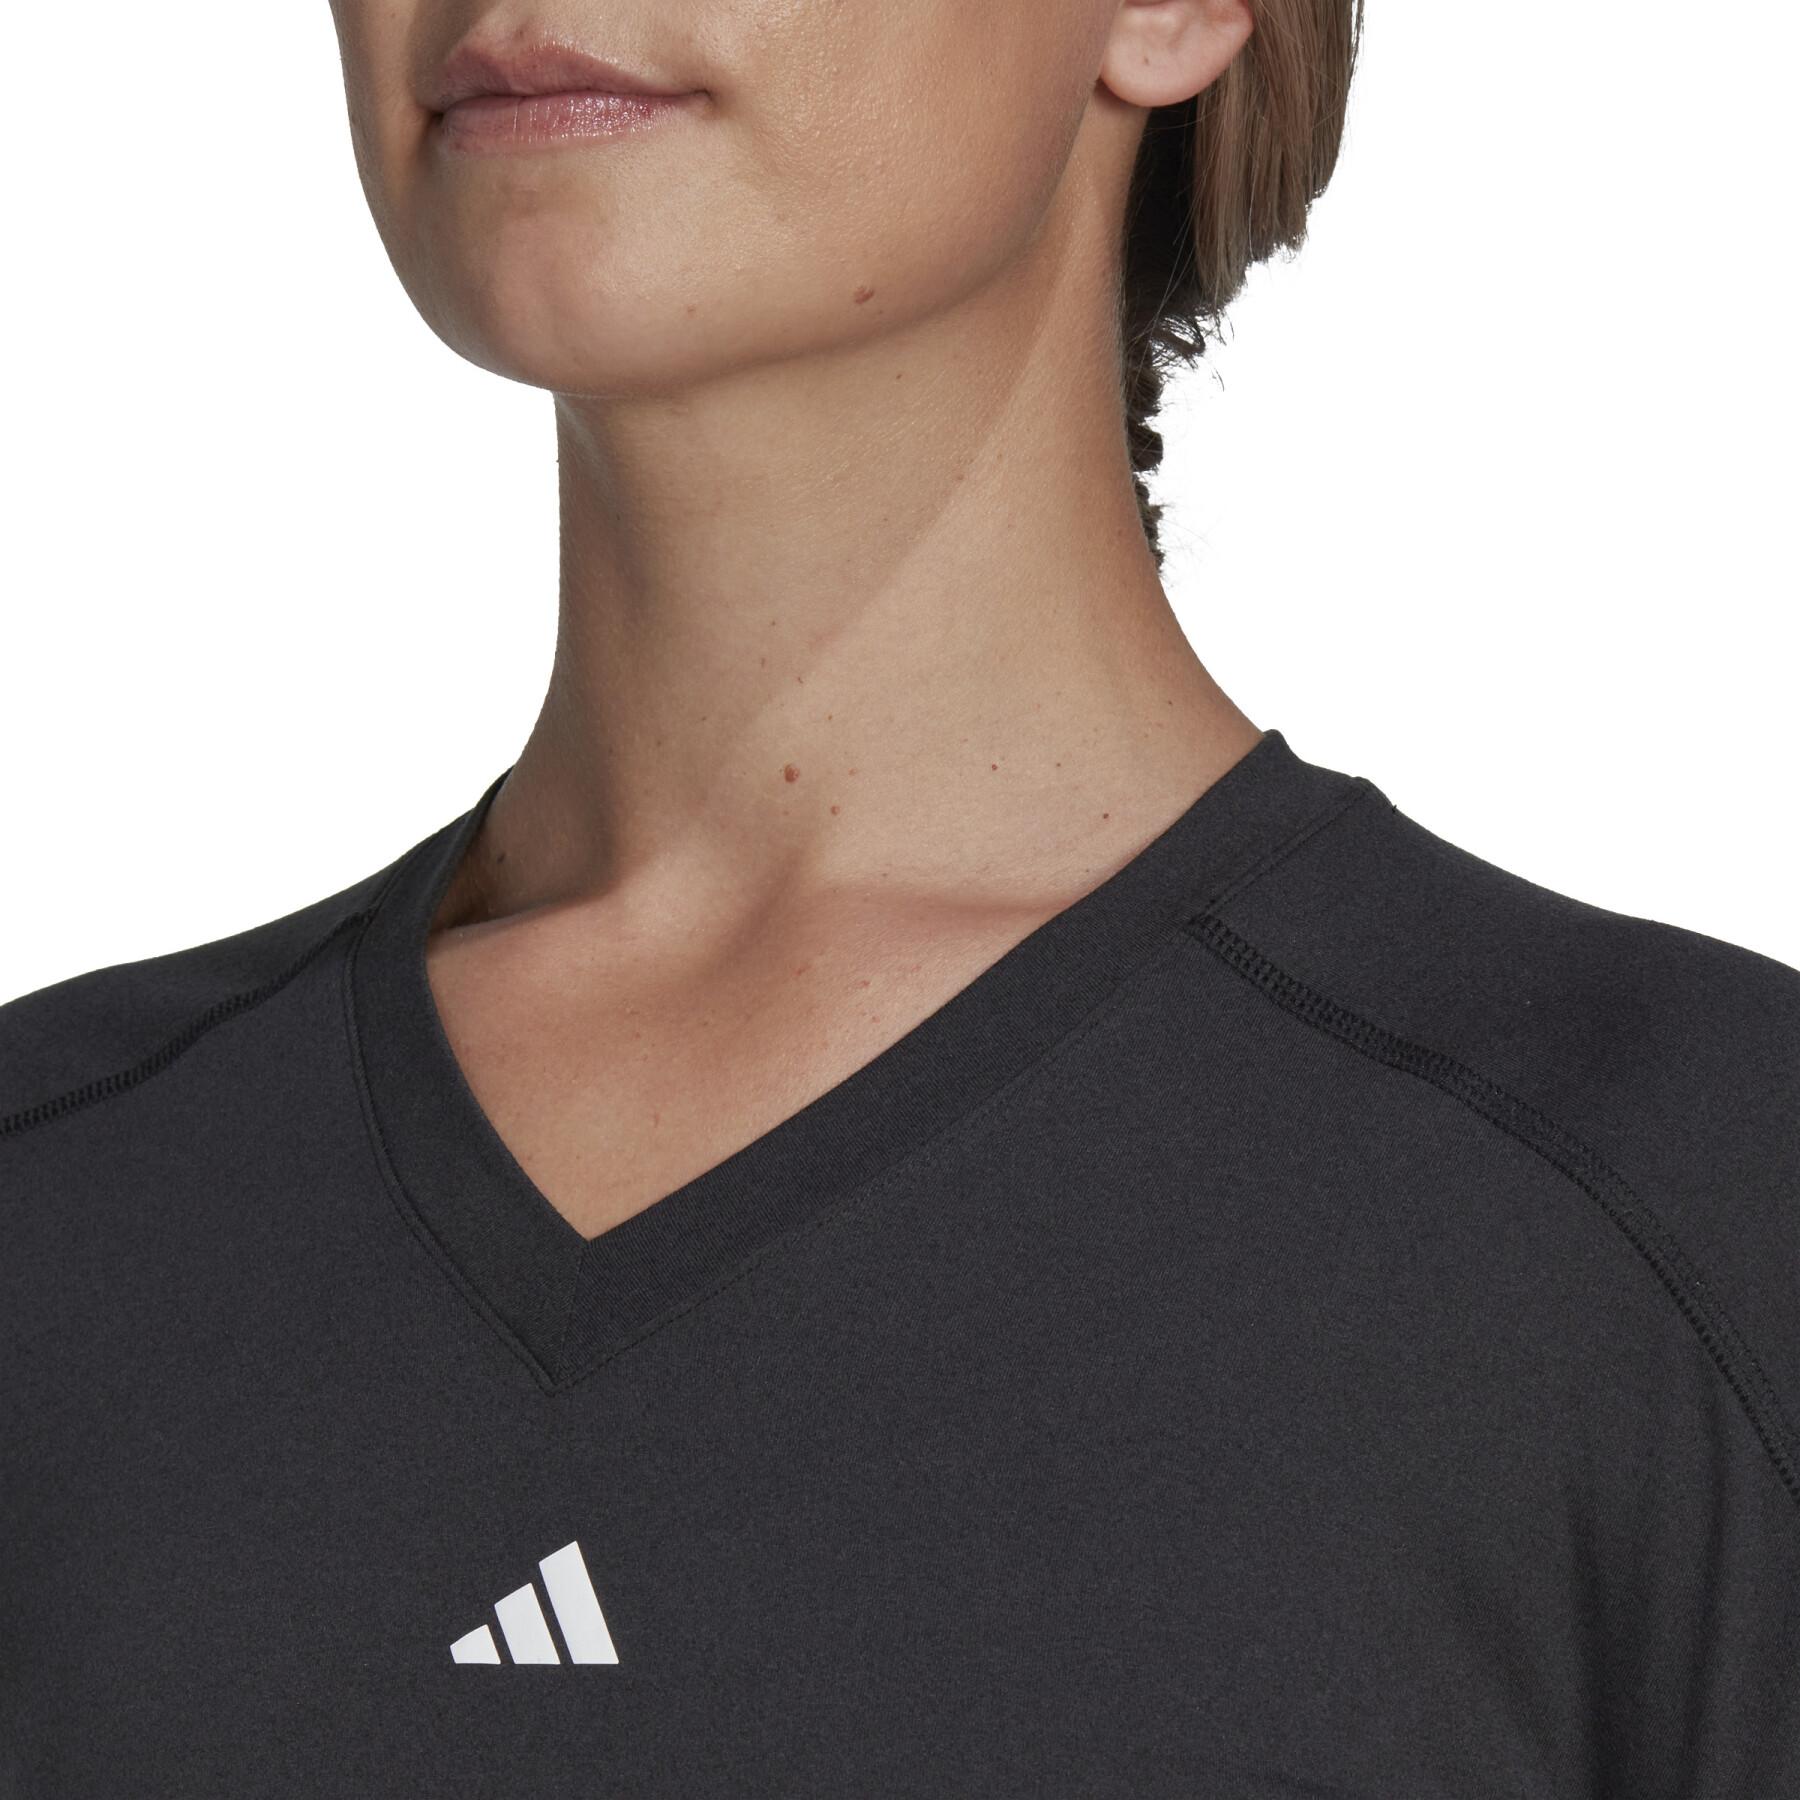 Women's minimal logo jersey adidas Aeroready Essentials